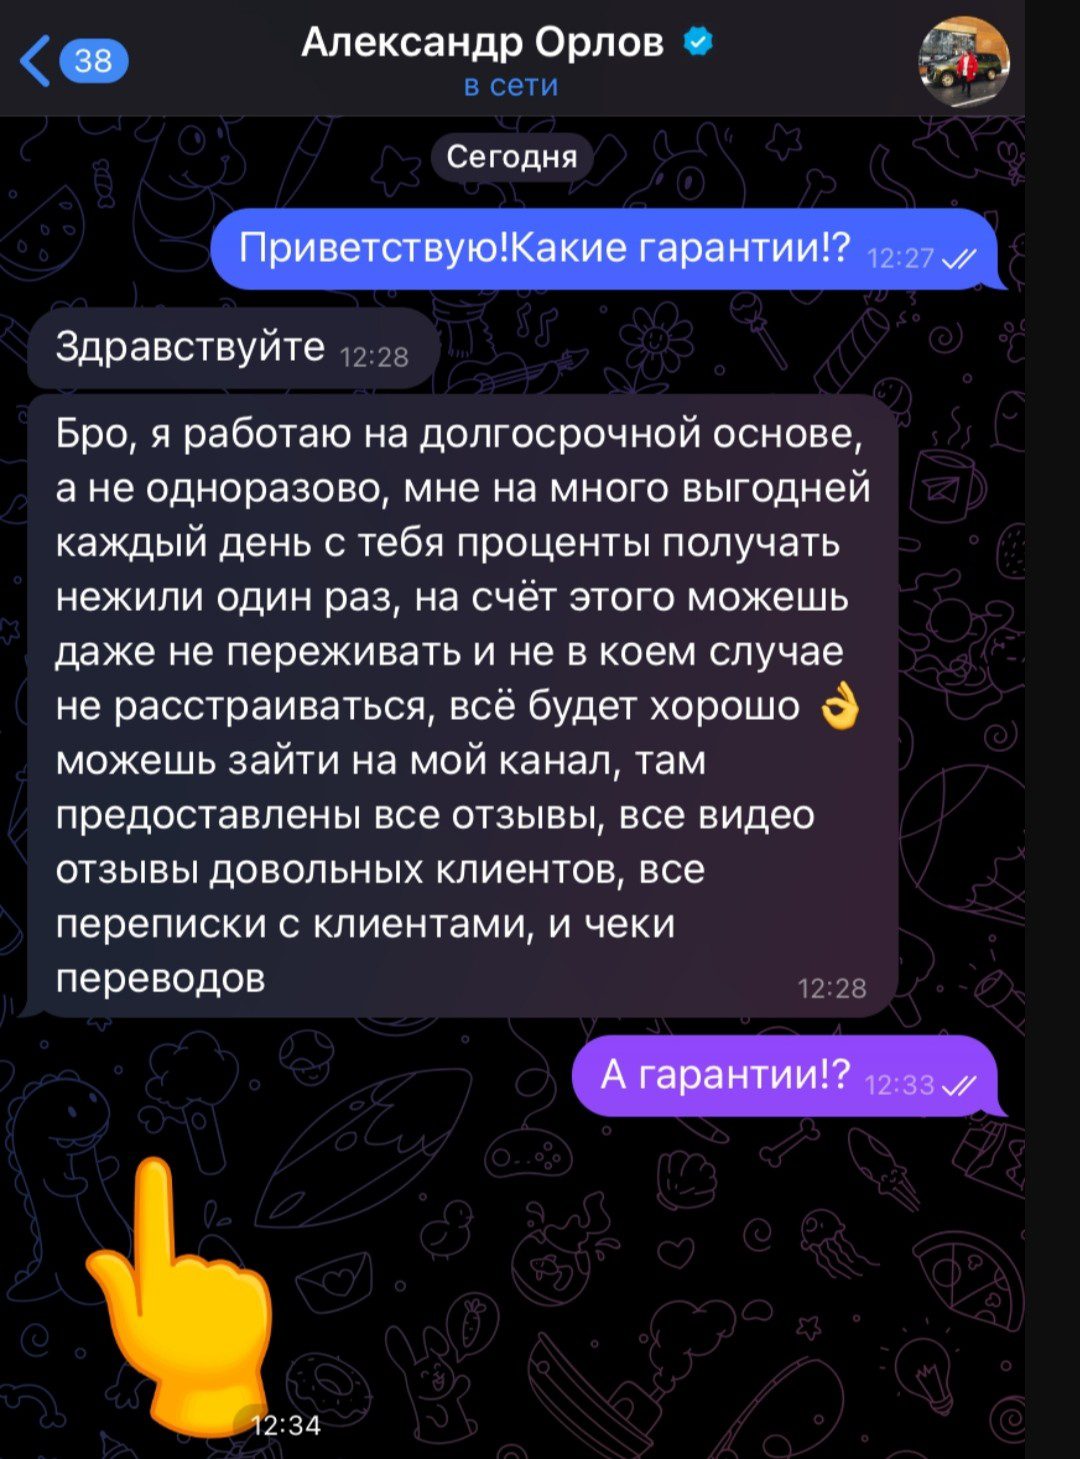 Телеграм Александр Орлов гарантии инвестирования